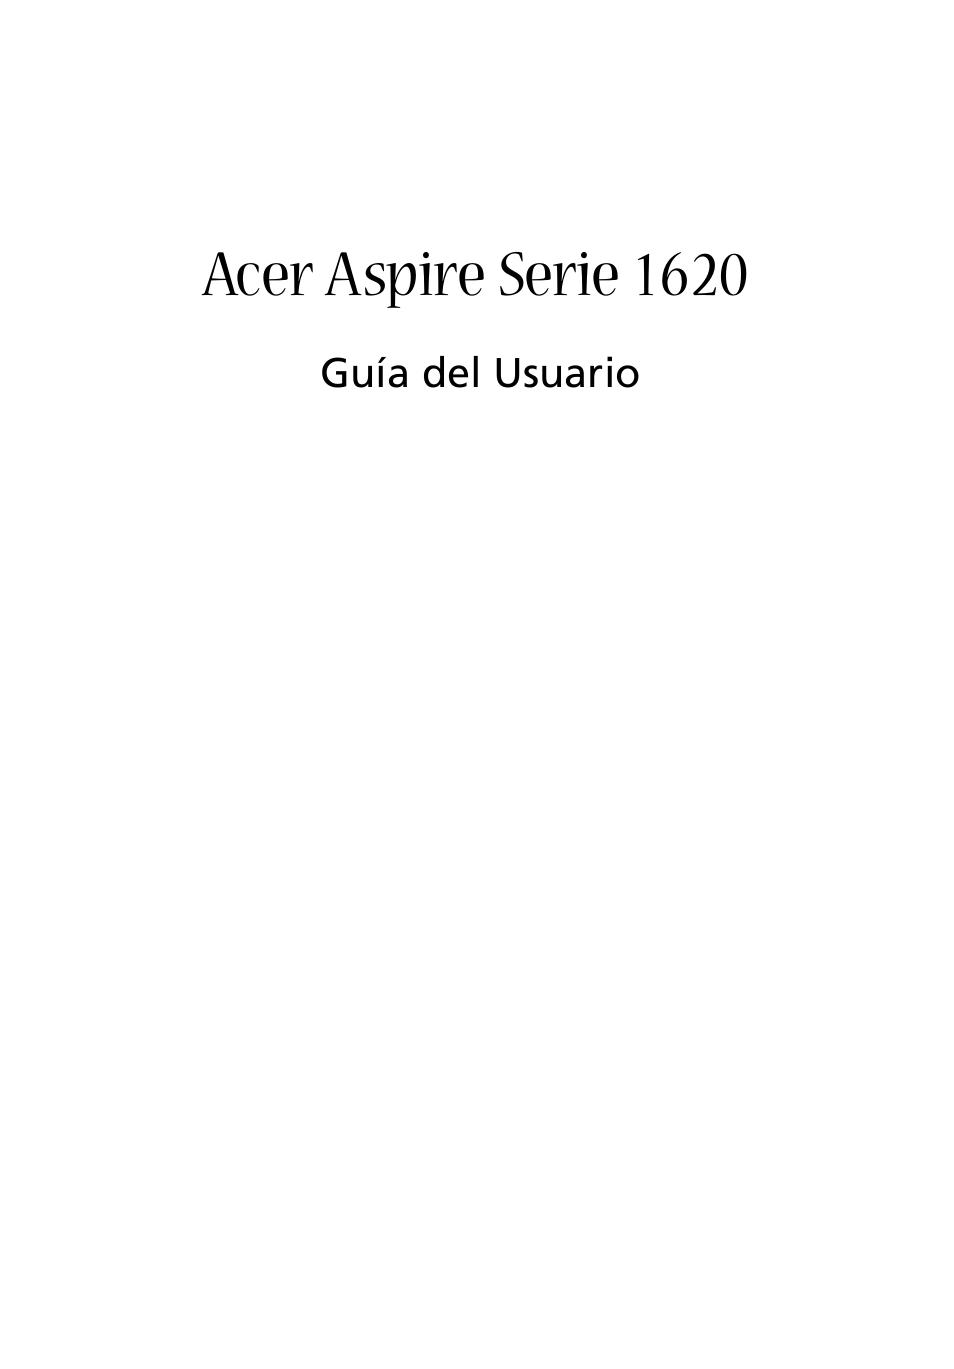 Aspire 1620